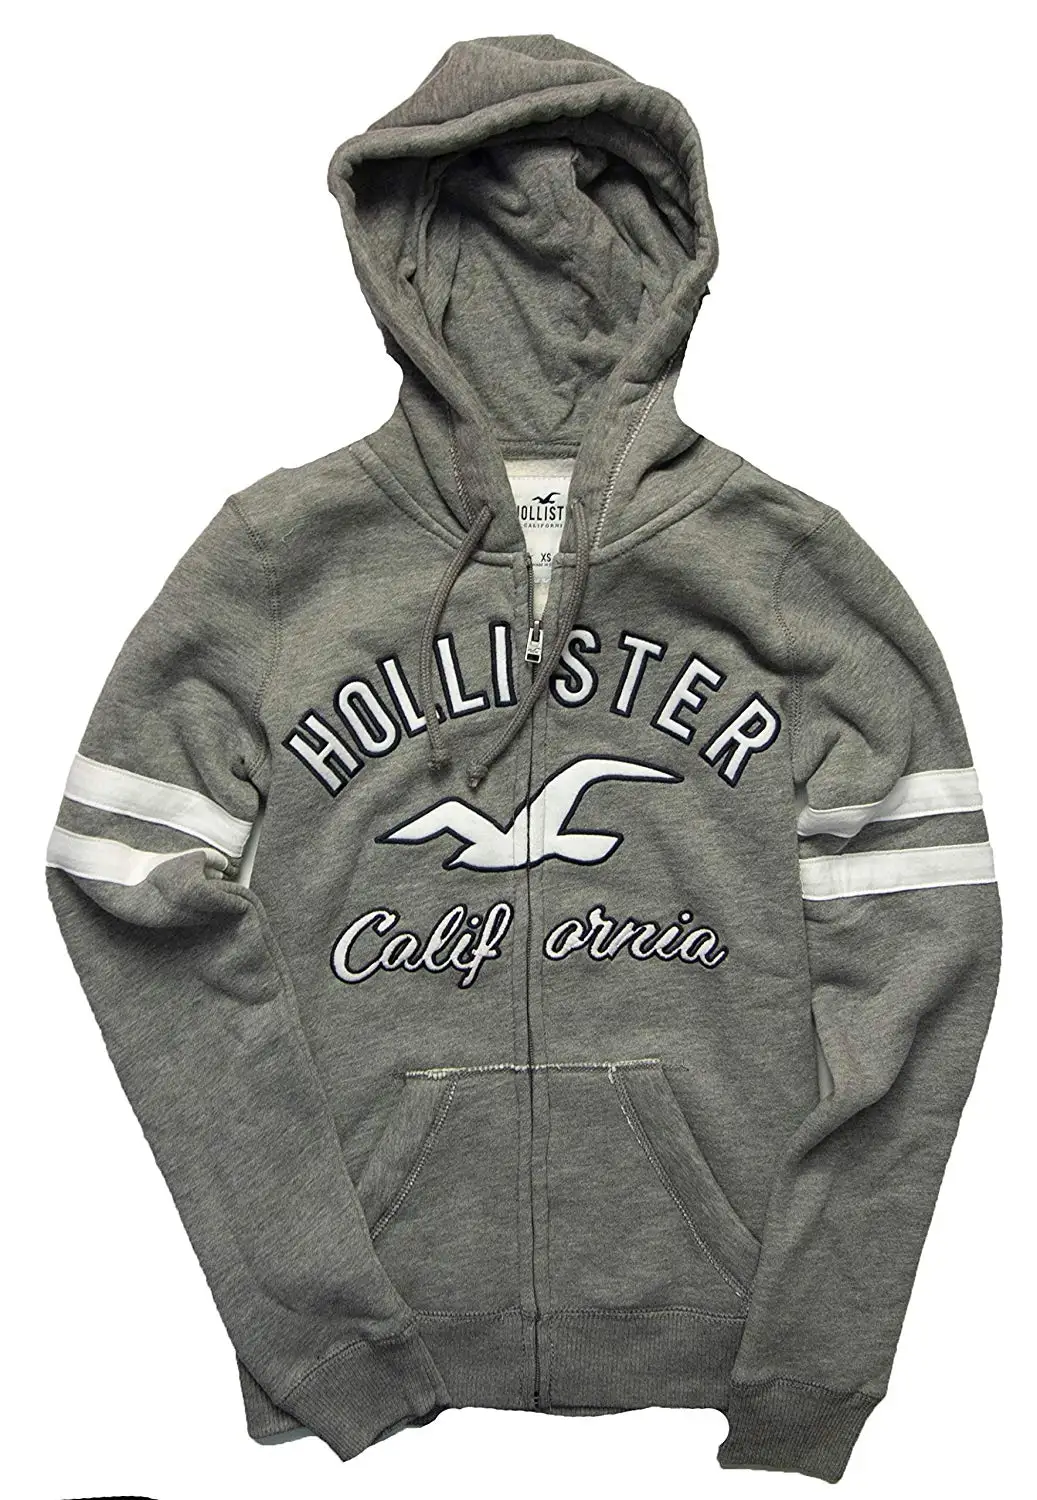 wholesale hollister hoodies